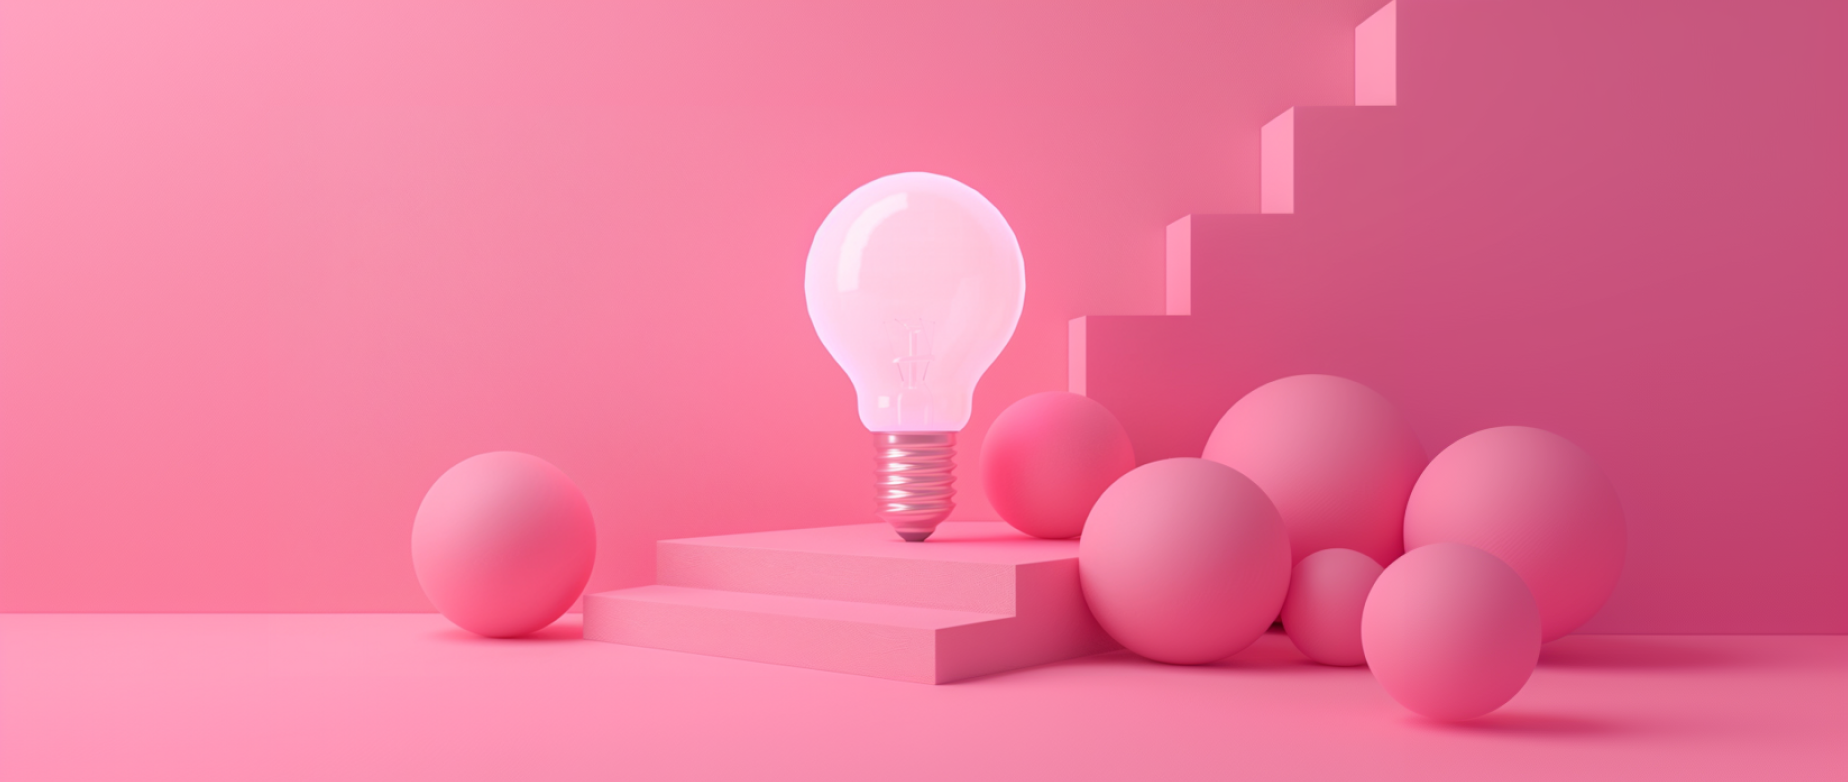 pink lightbulbs and balls representing creative marketing ideas